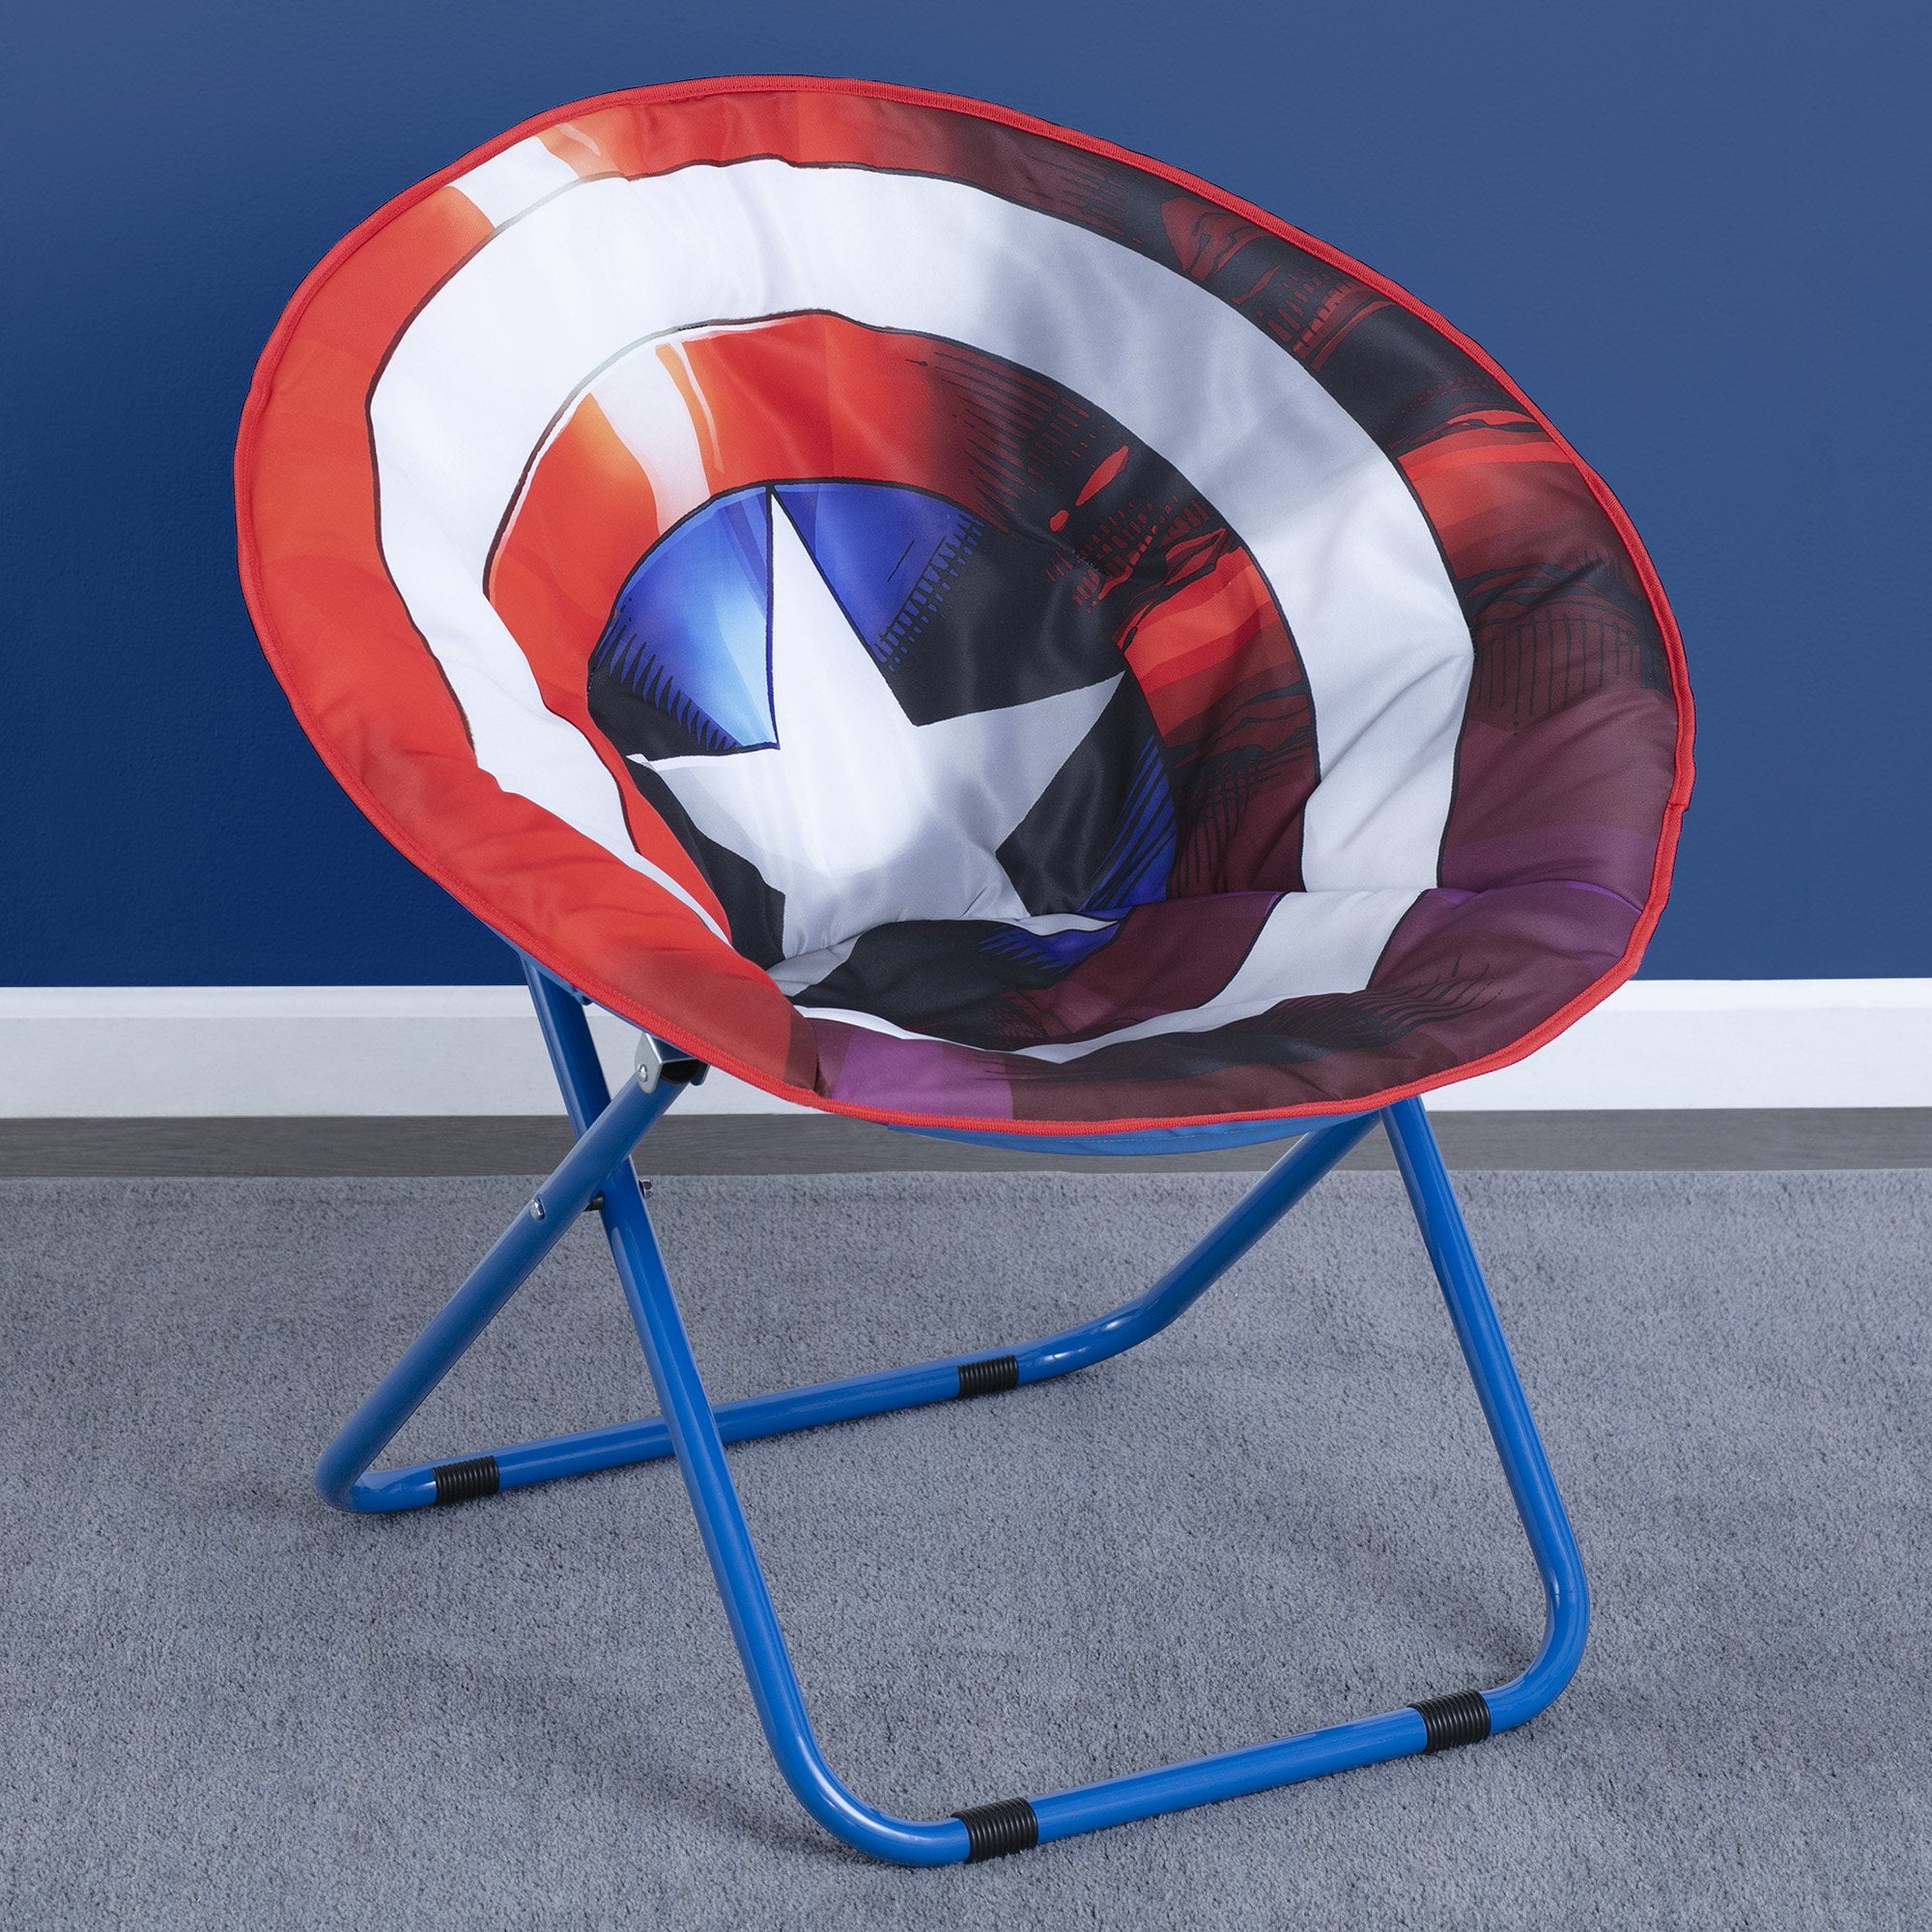 Avengers Saucer Chair for Kids/Teens/Young Adults - Delta Children